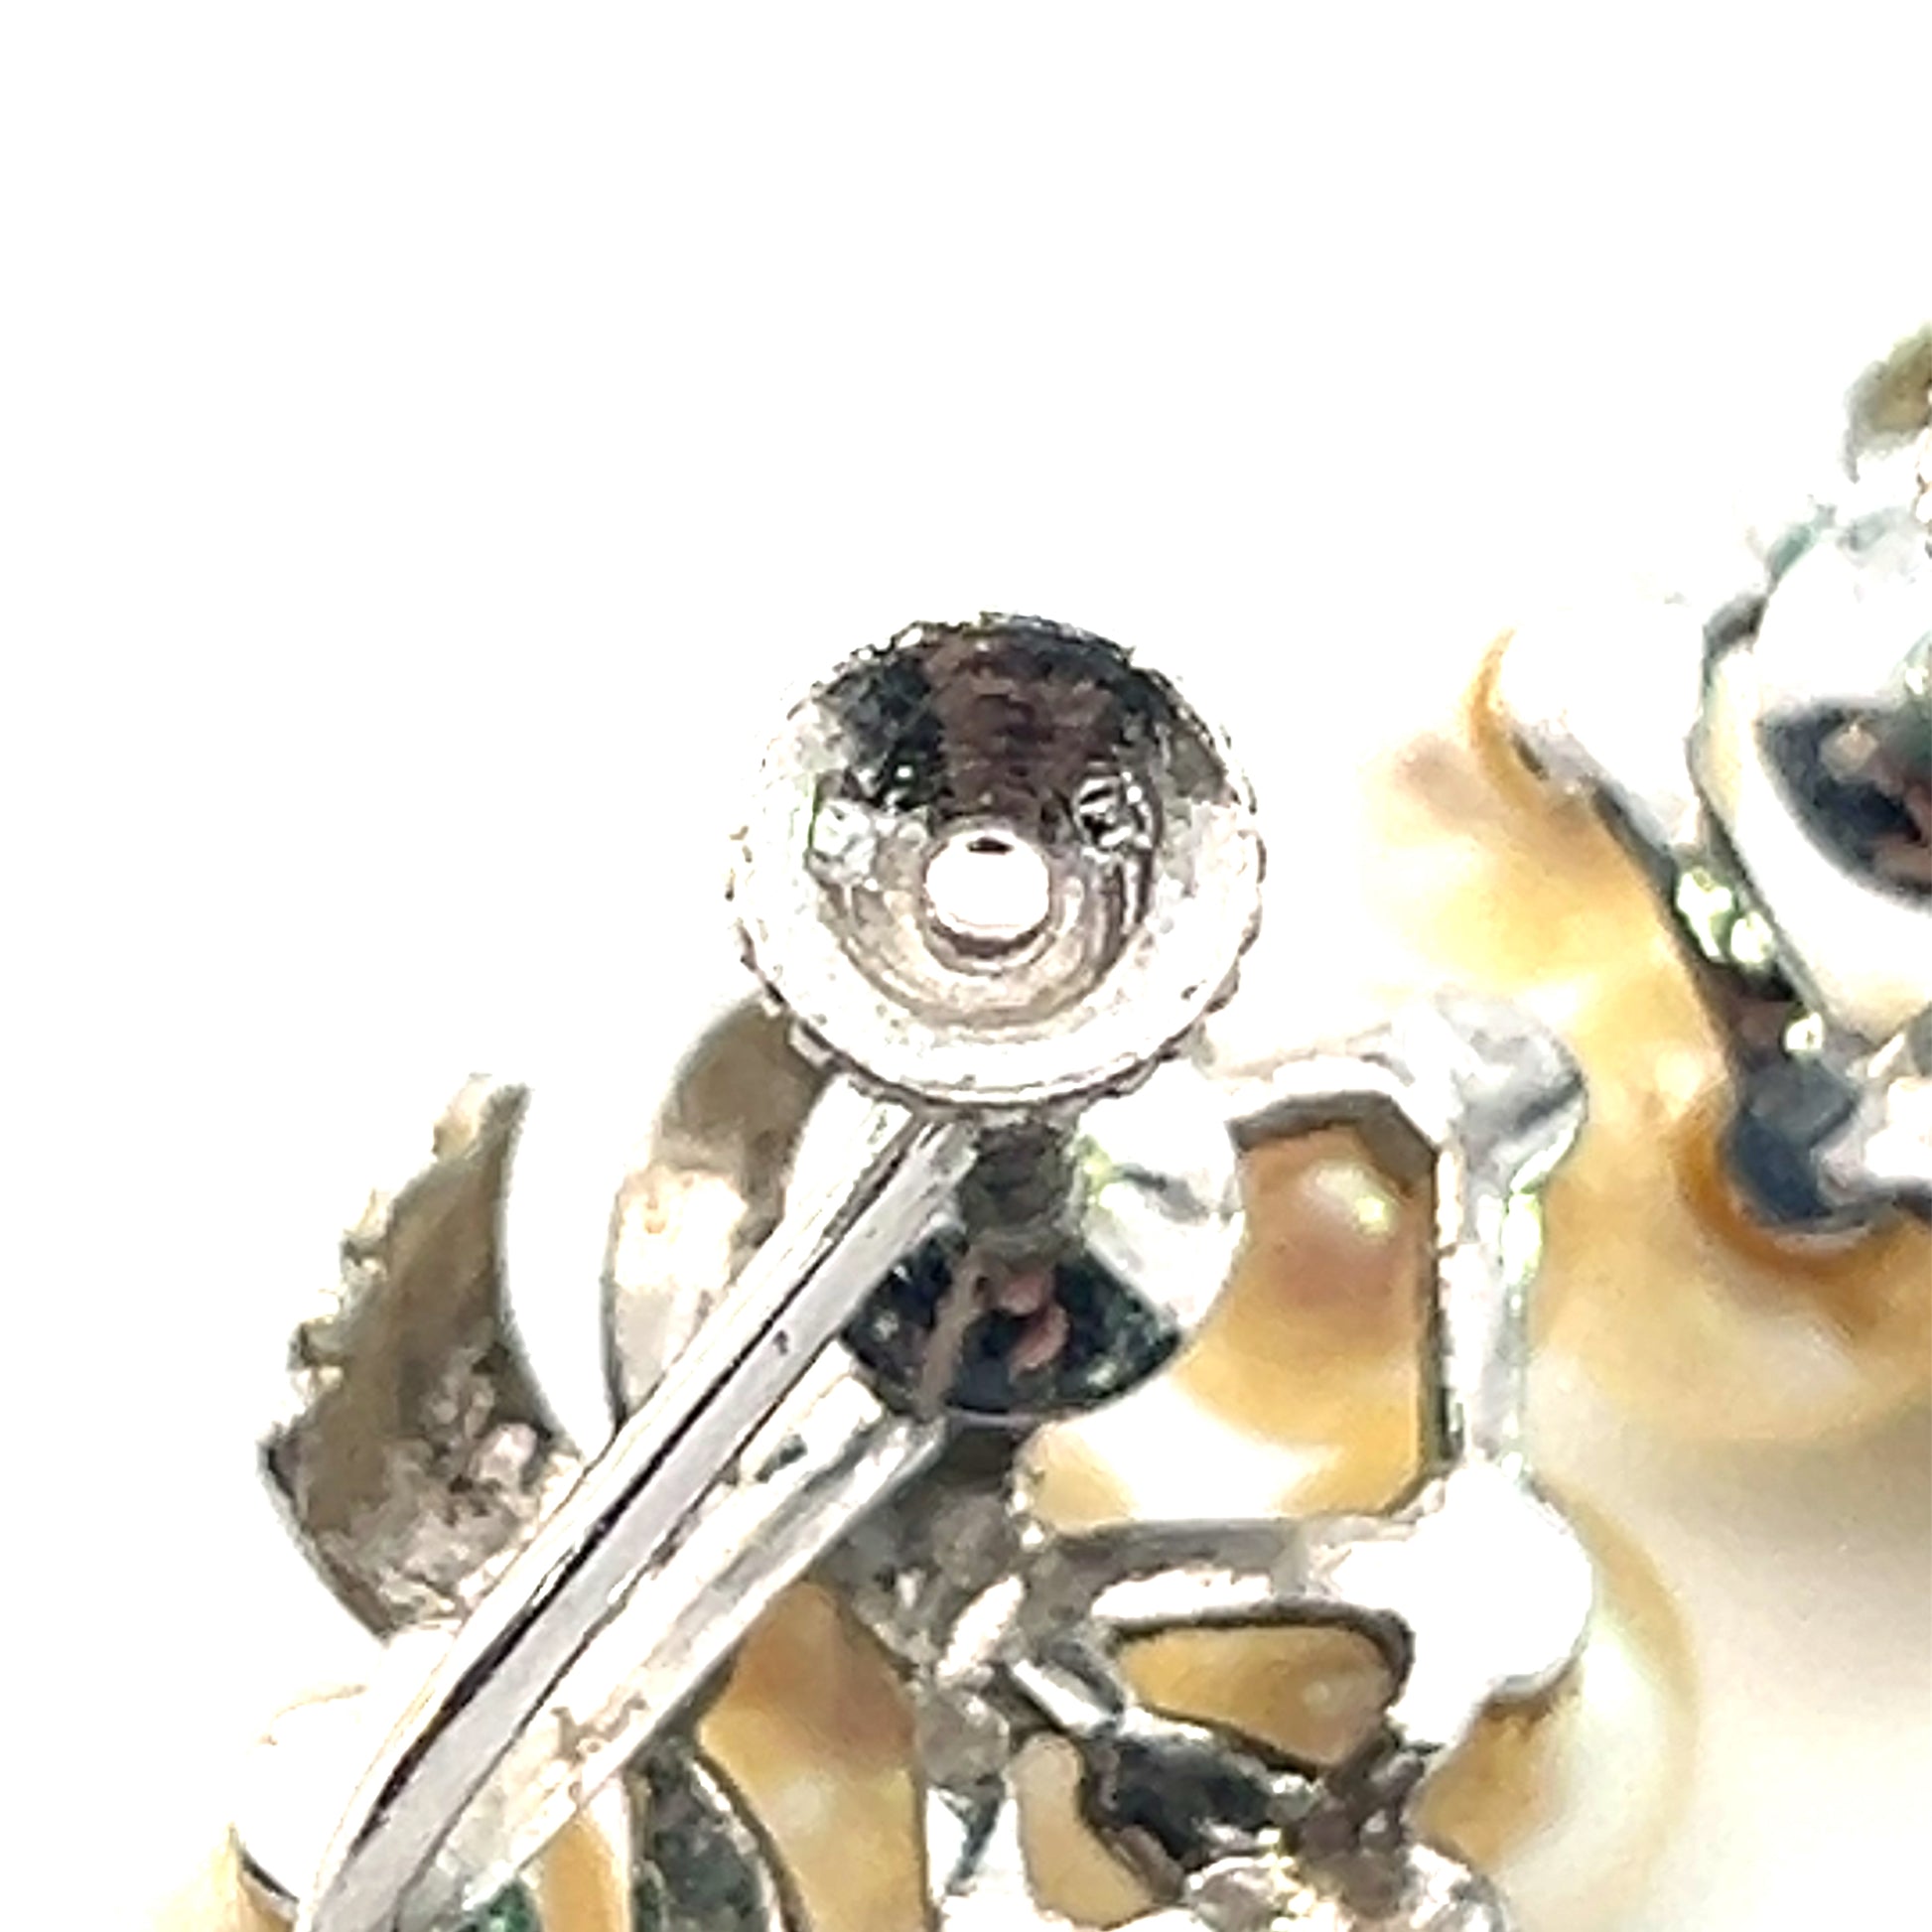 Mikimoto Estate Akoya Pearl Clip-on Earrings Sterling Silver 5-6 mm 6.4 Grams M366